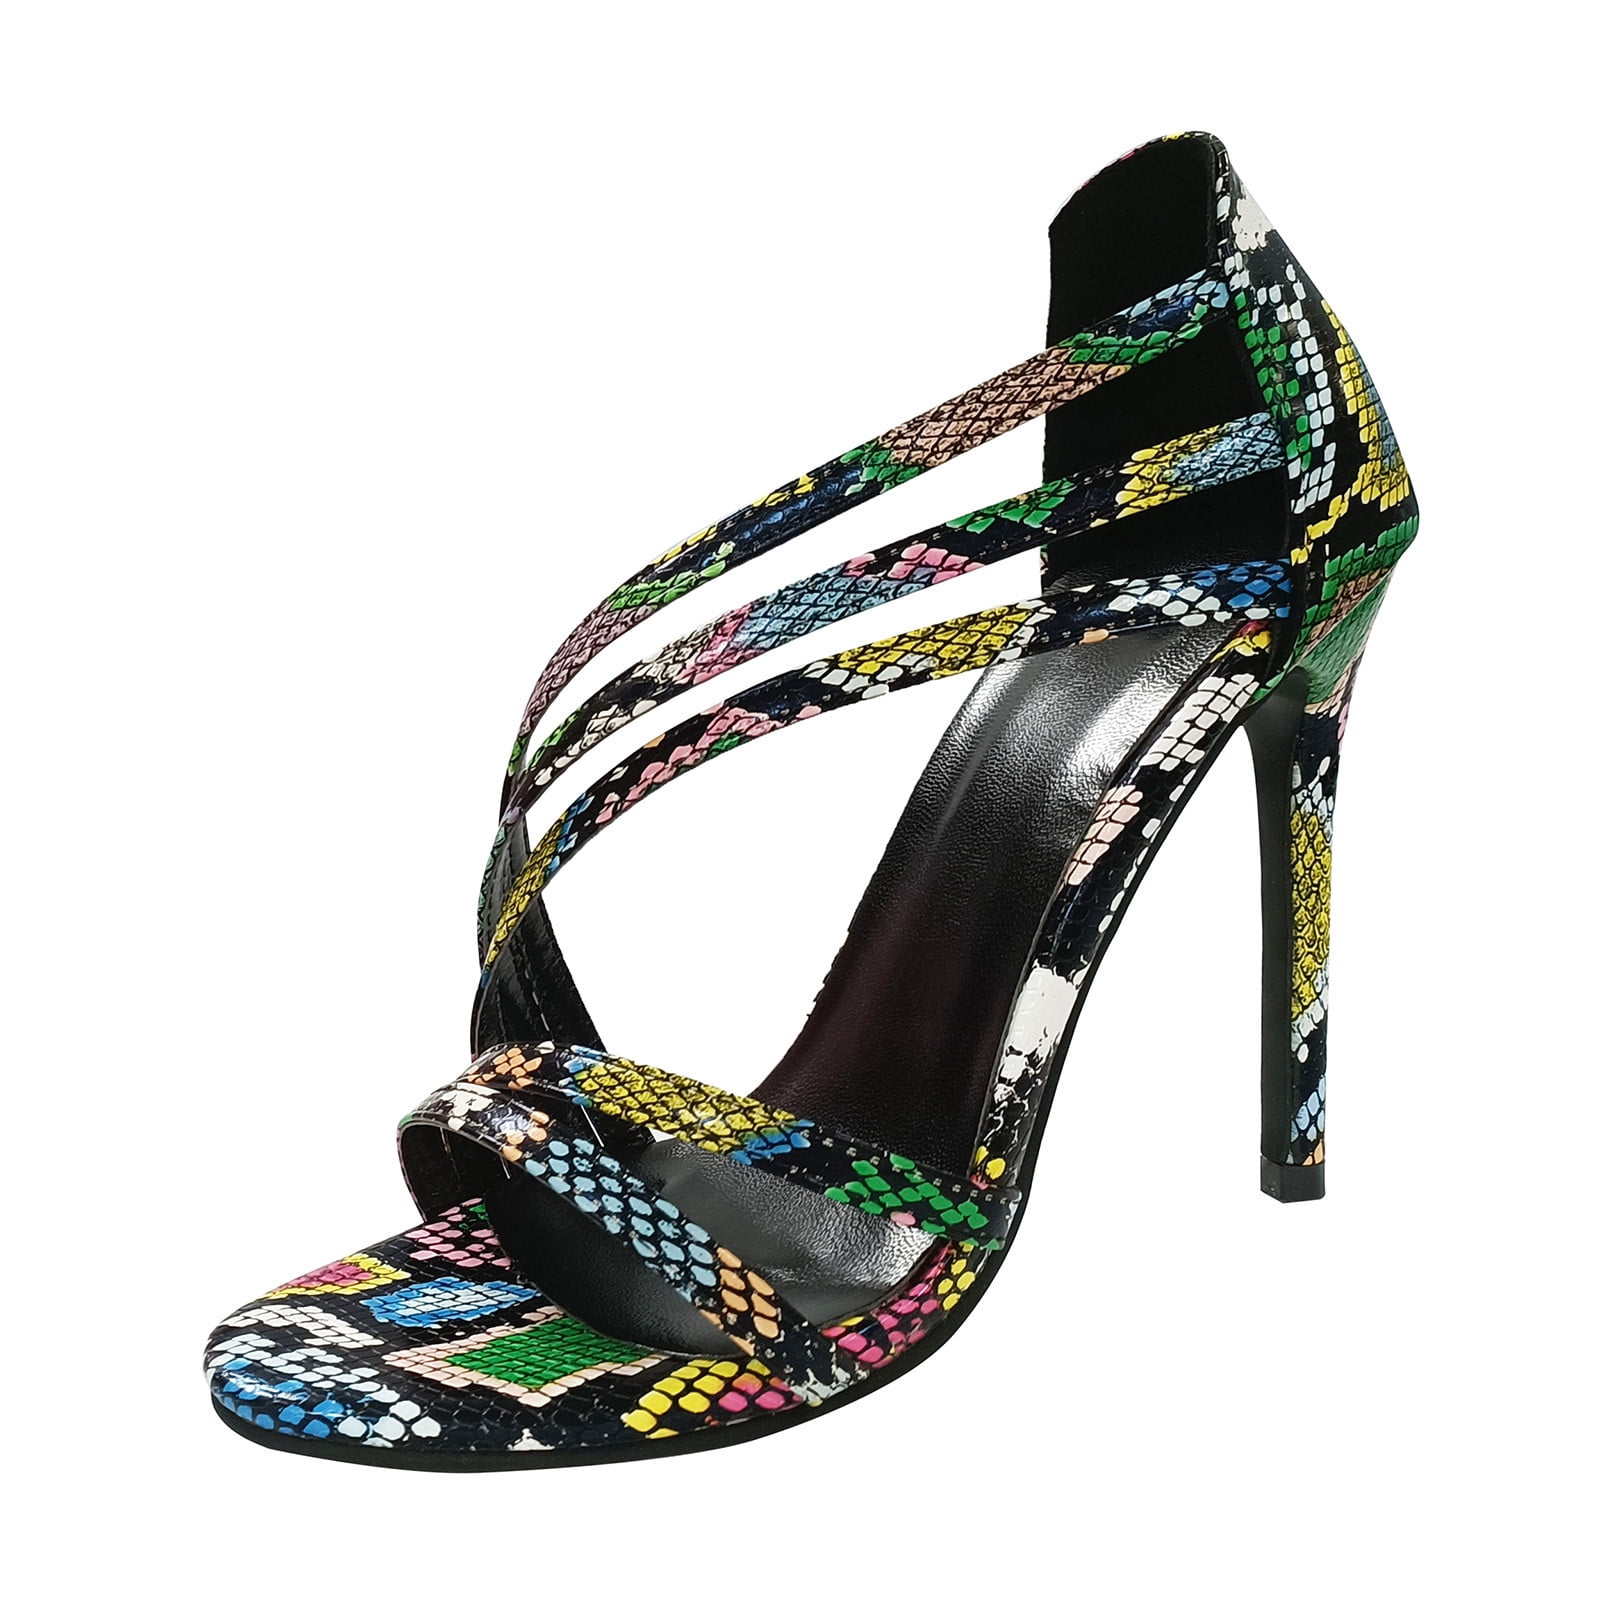 Dolce Vita Size 6.5 Snake Print Maude Multi-color Cork Platform Heels | eBay